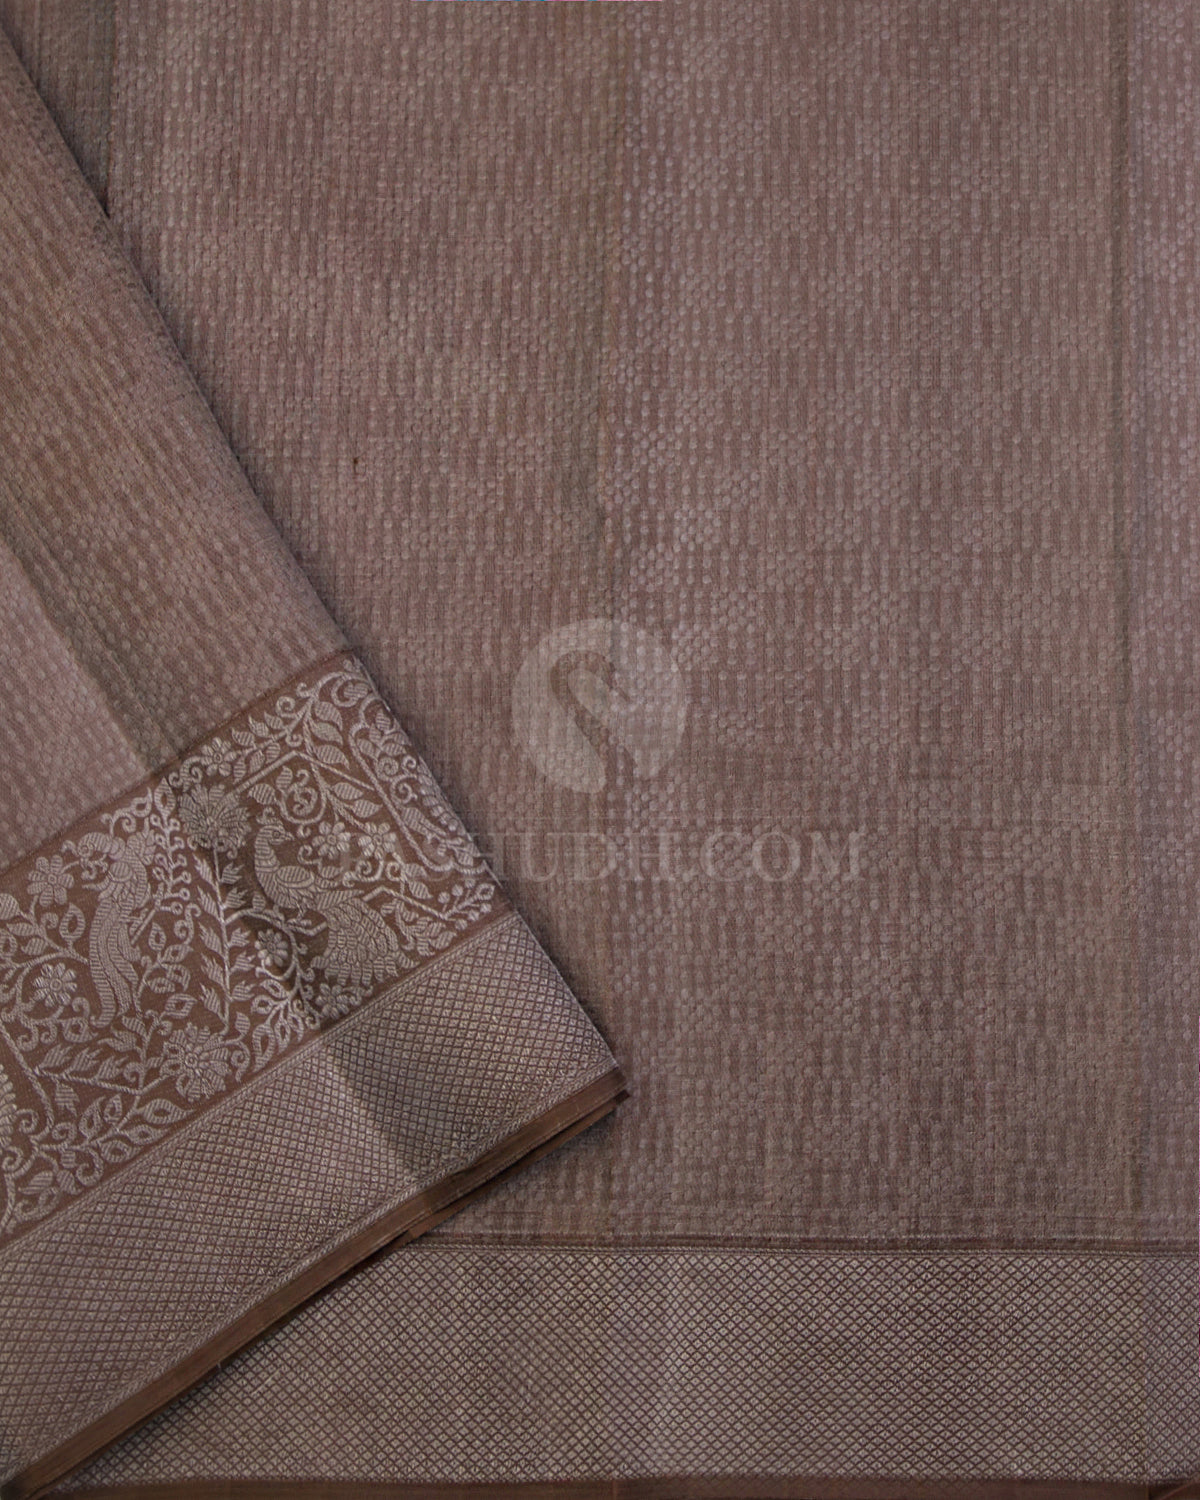 Tan and Brown Kanjivaram Silk Saree - DT216